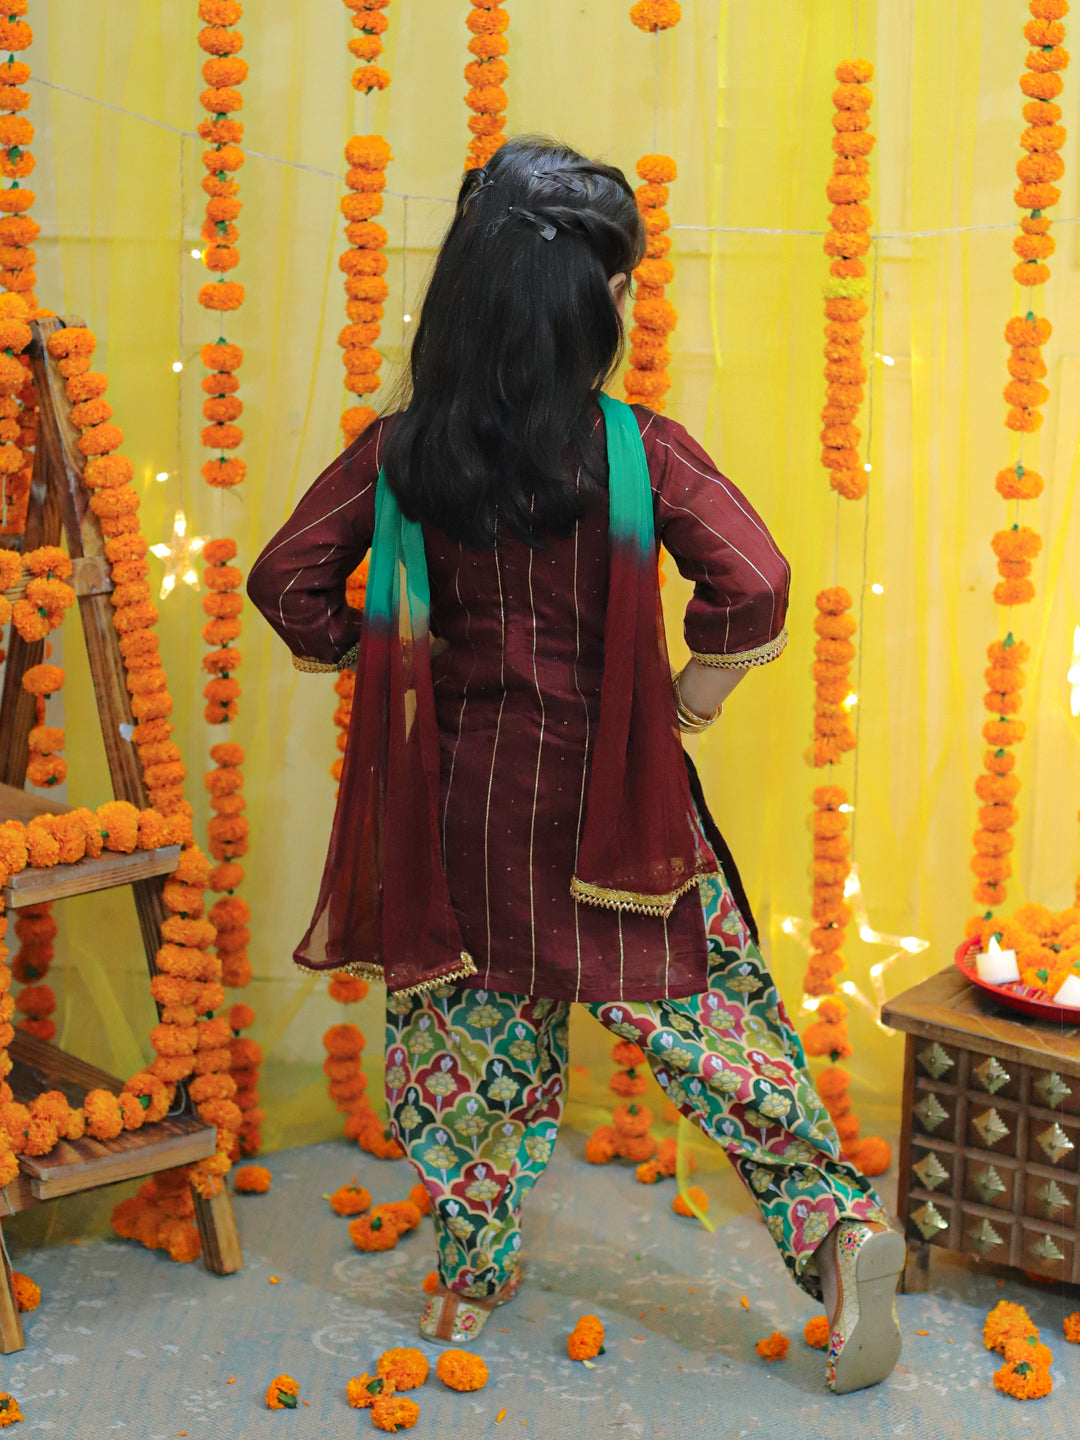 BownBee Girls Ethic Traditional  Indian Festive Chanderi Kurta with Printed Salwar and Dupatta - Maroon